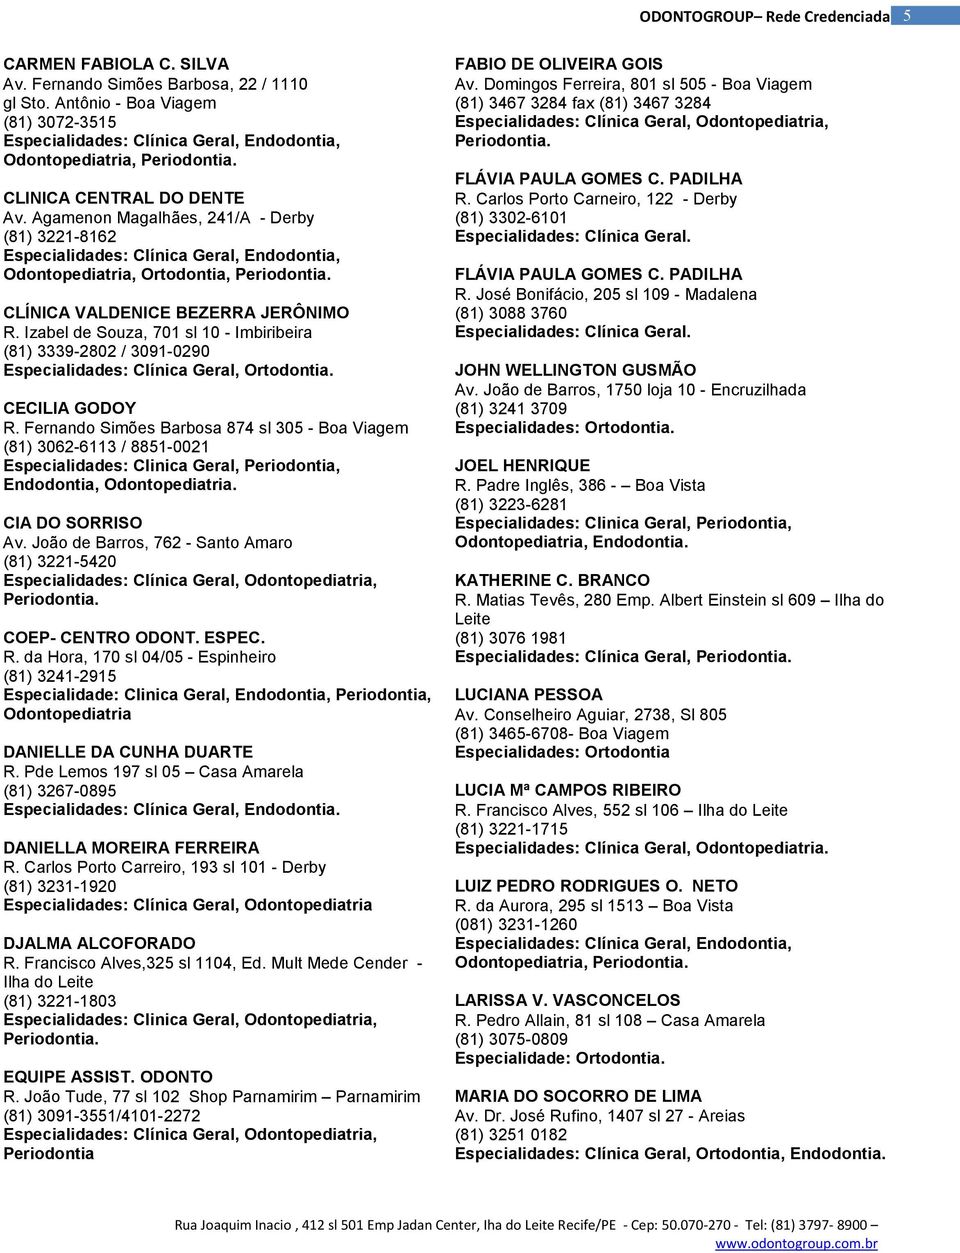 Izabel de Souza, 701 sl 10 - Imbiribeira (81) 3339-2802 / 3091-0290 Especialidades: Clínica Geral, Ortodontia. CECILIA GODOY R.